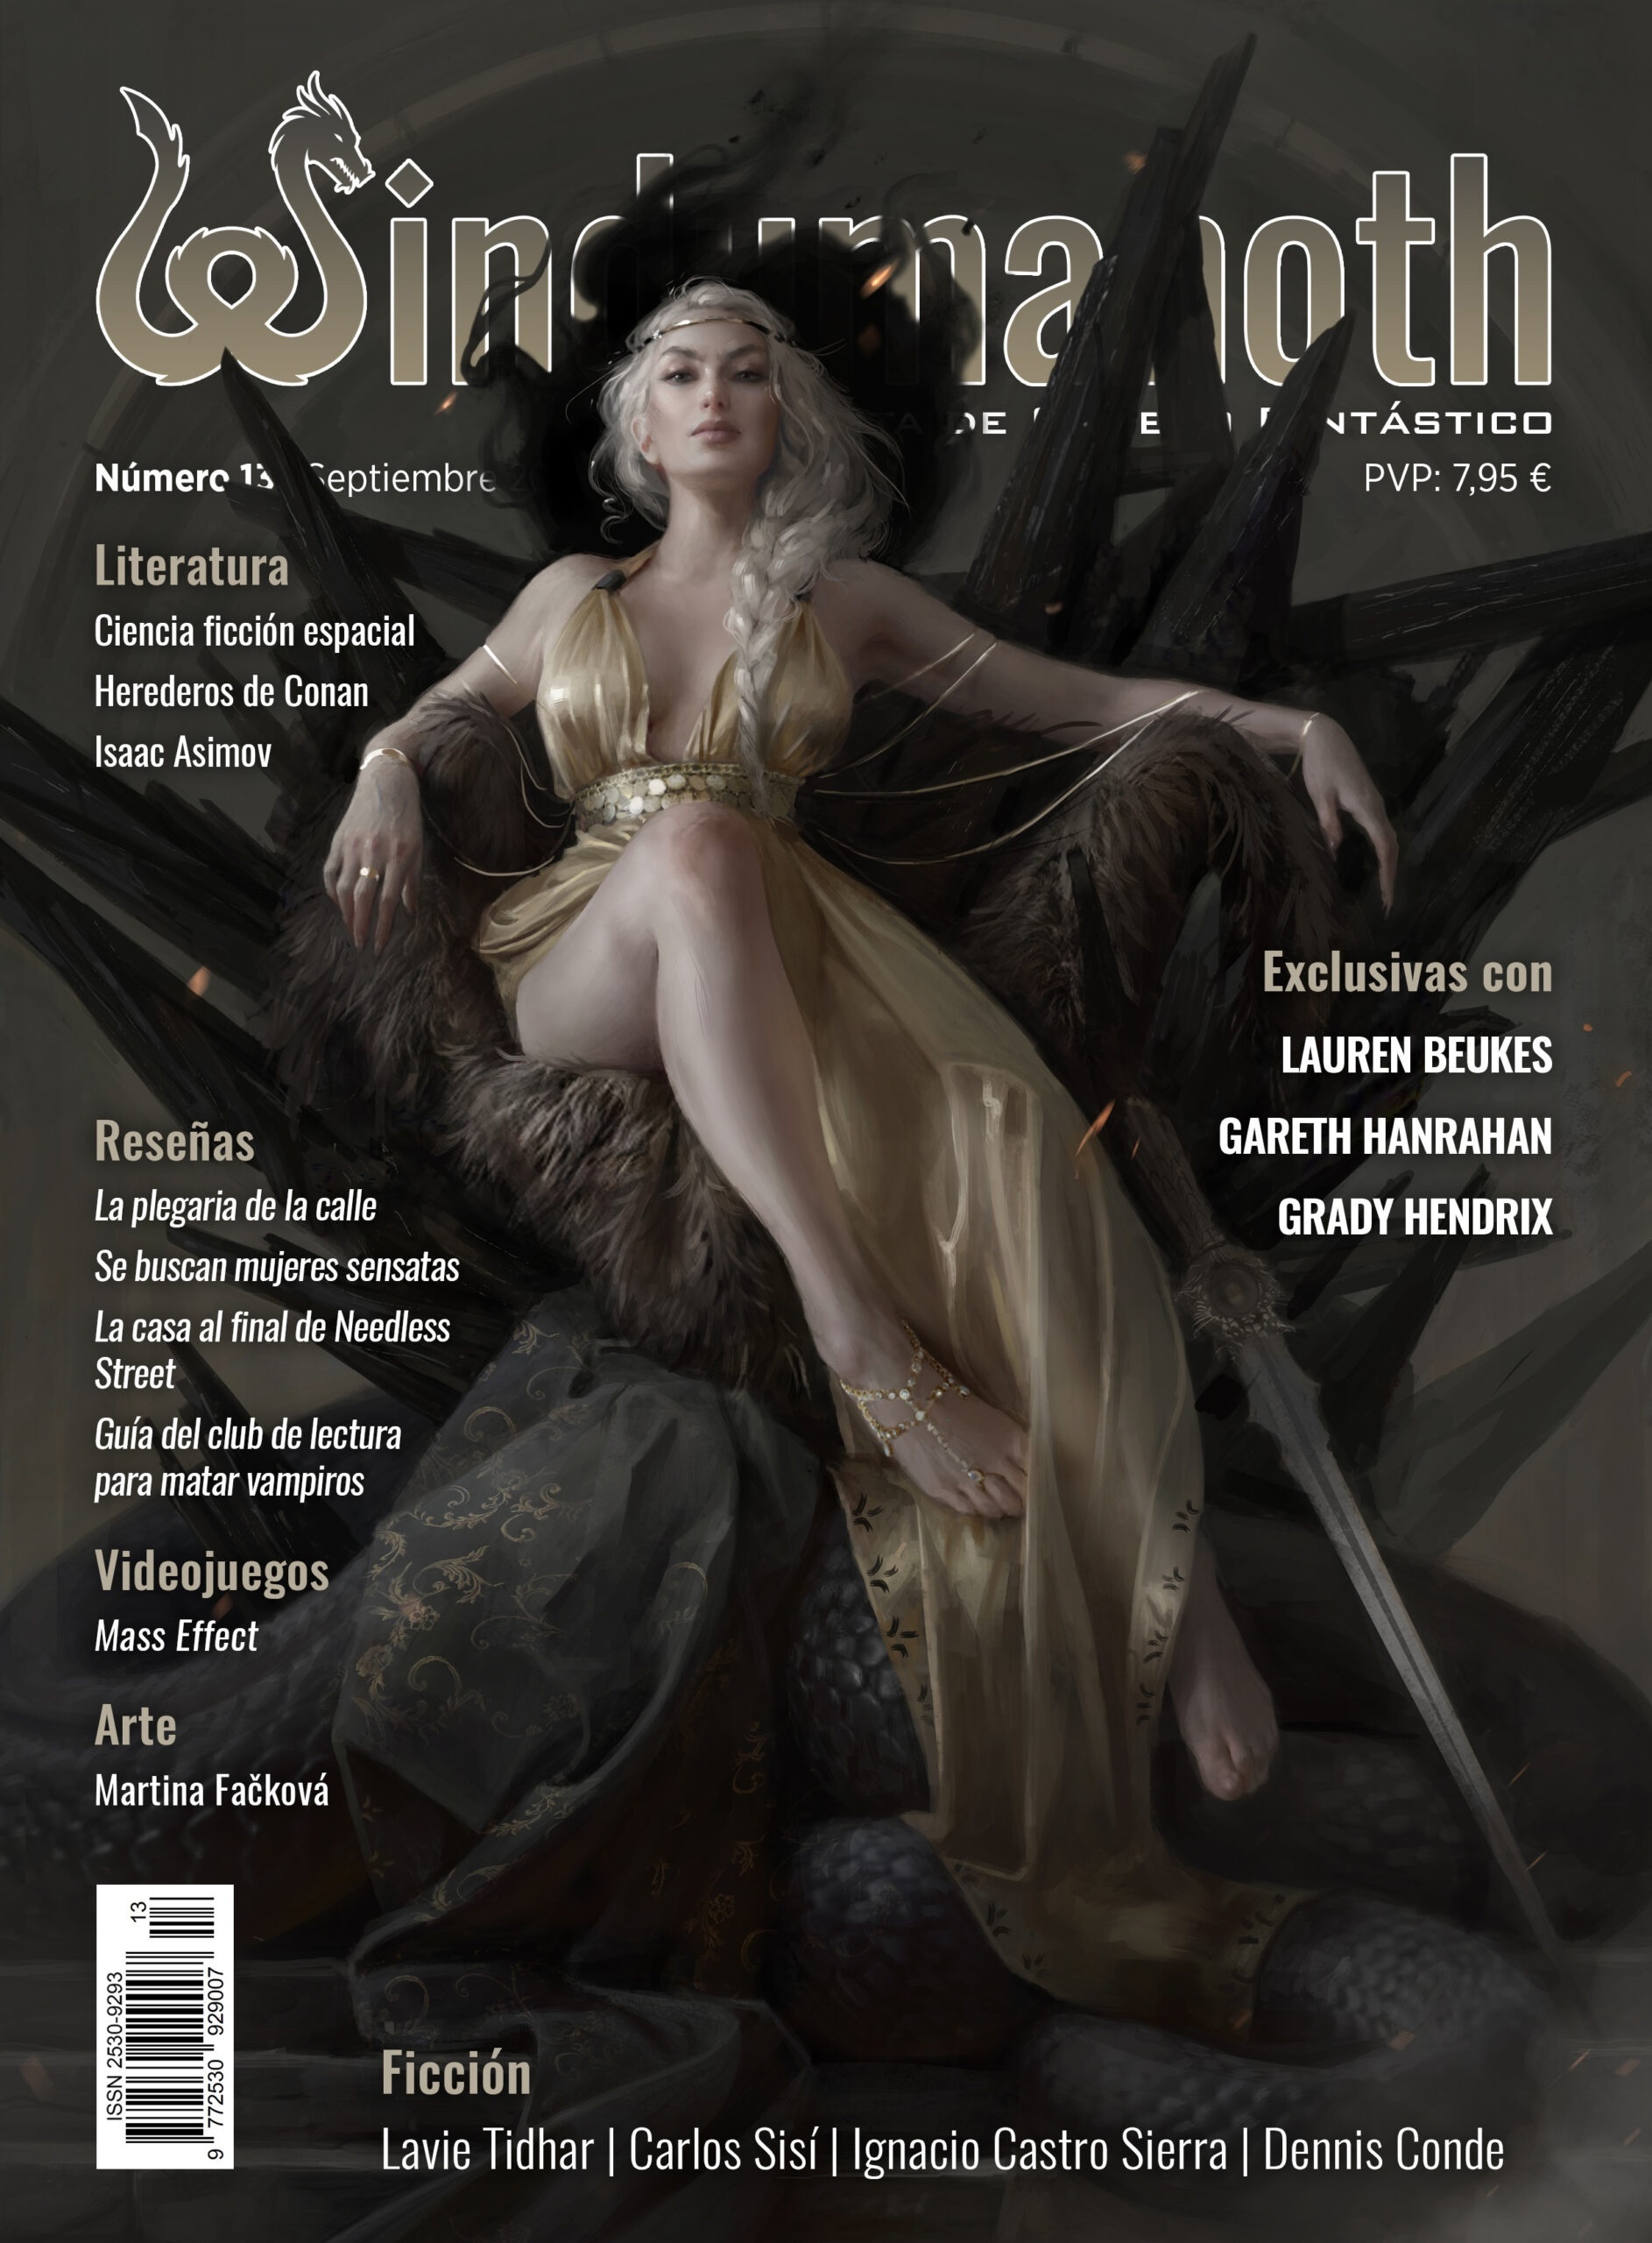 Windumanoth nº 13. Septiembre 2021 "Revista de género fantástico"